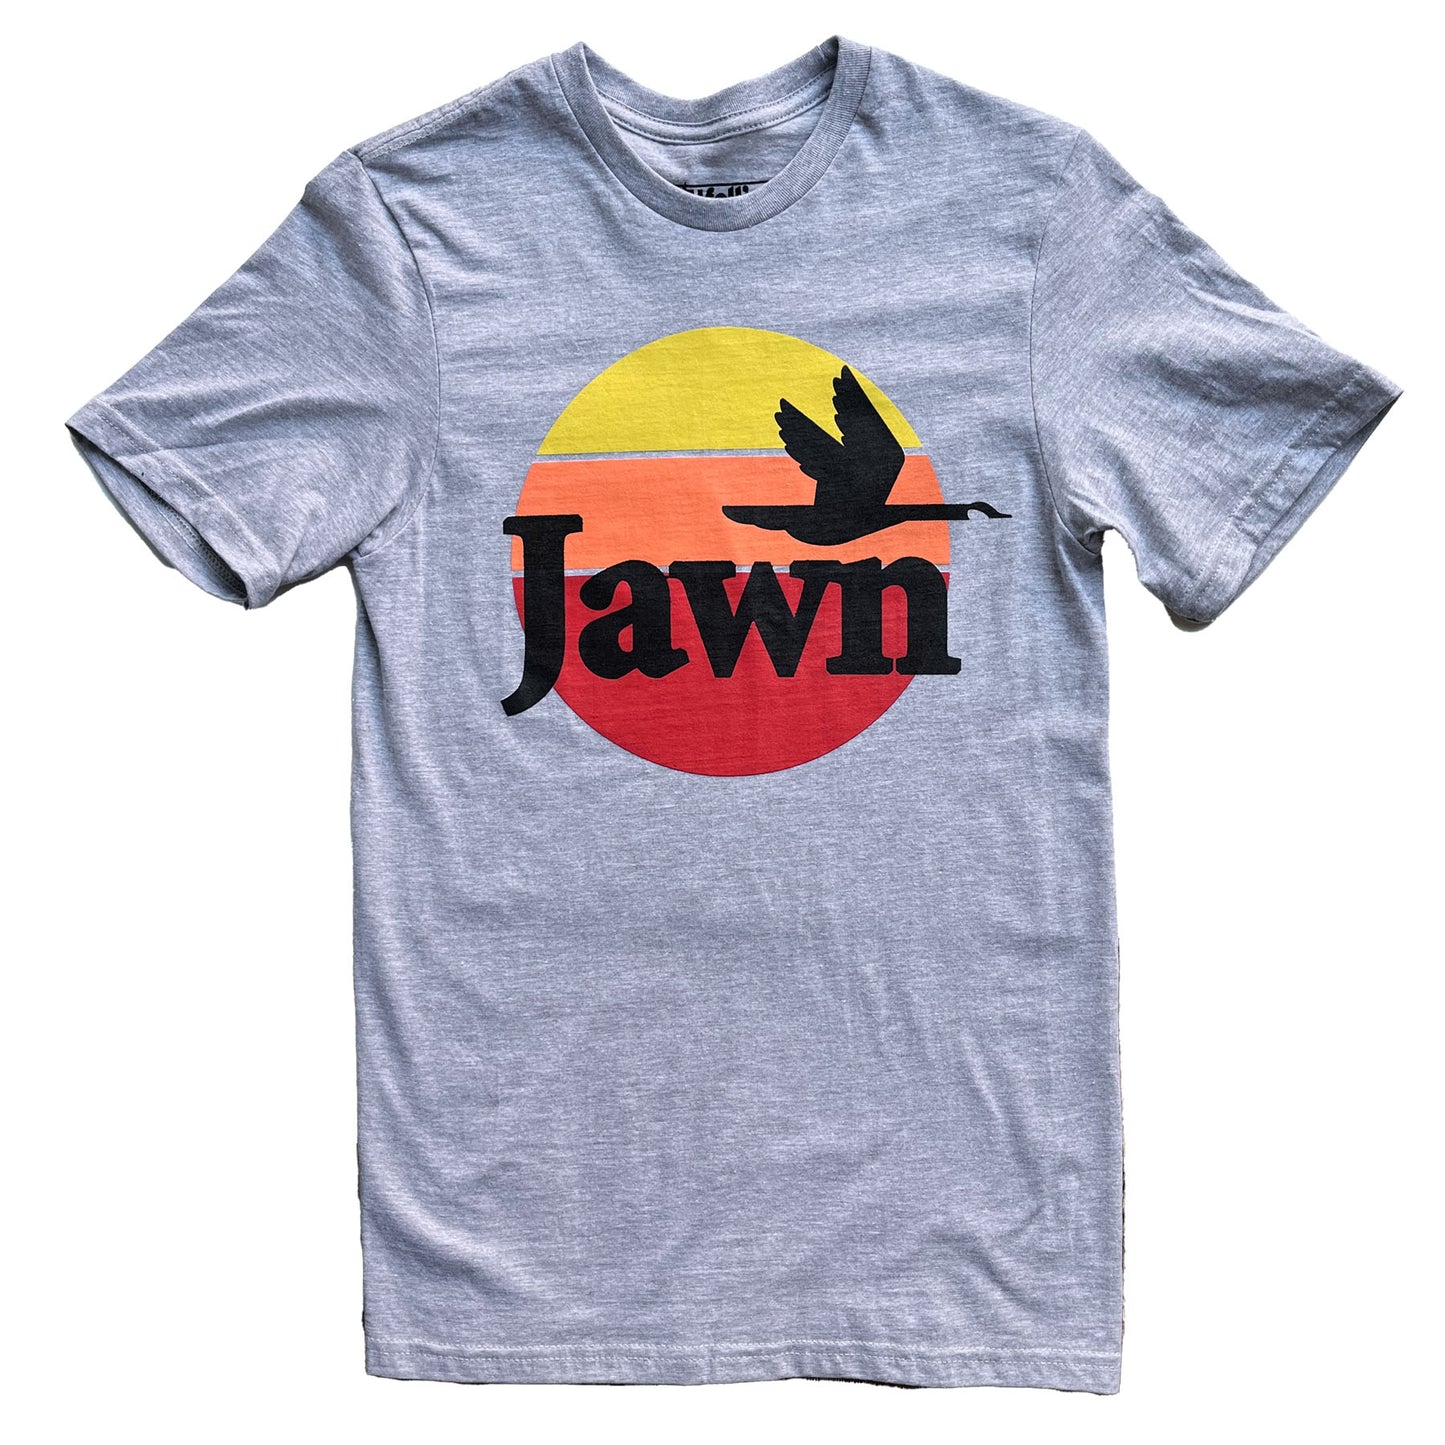 New Wawa Jawn (Grey Tee Shirt)